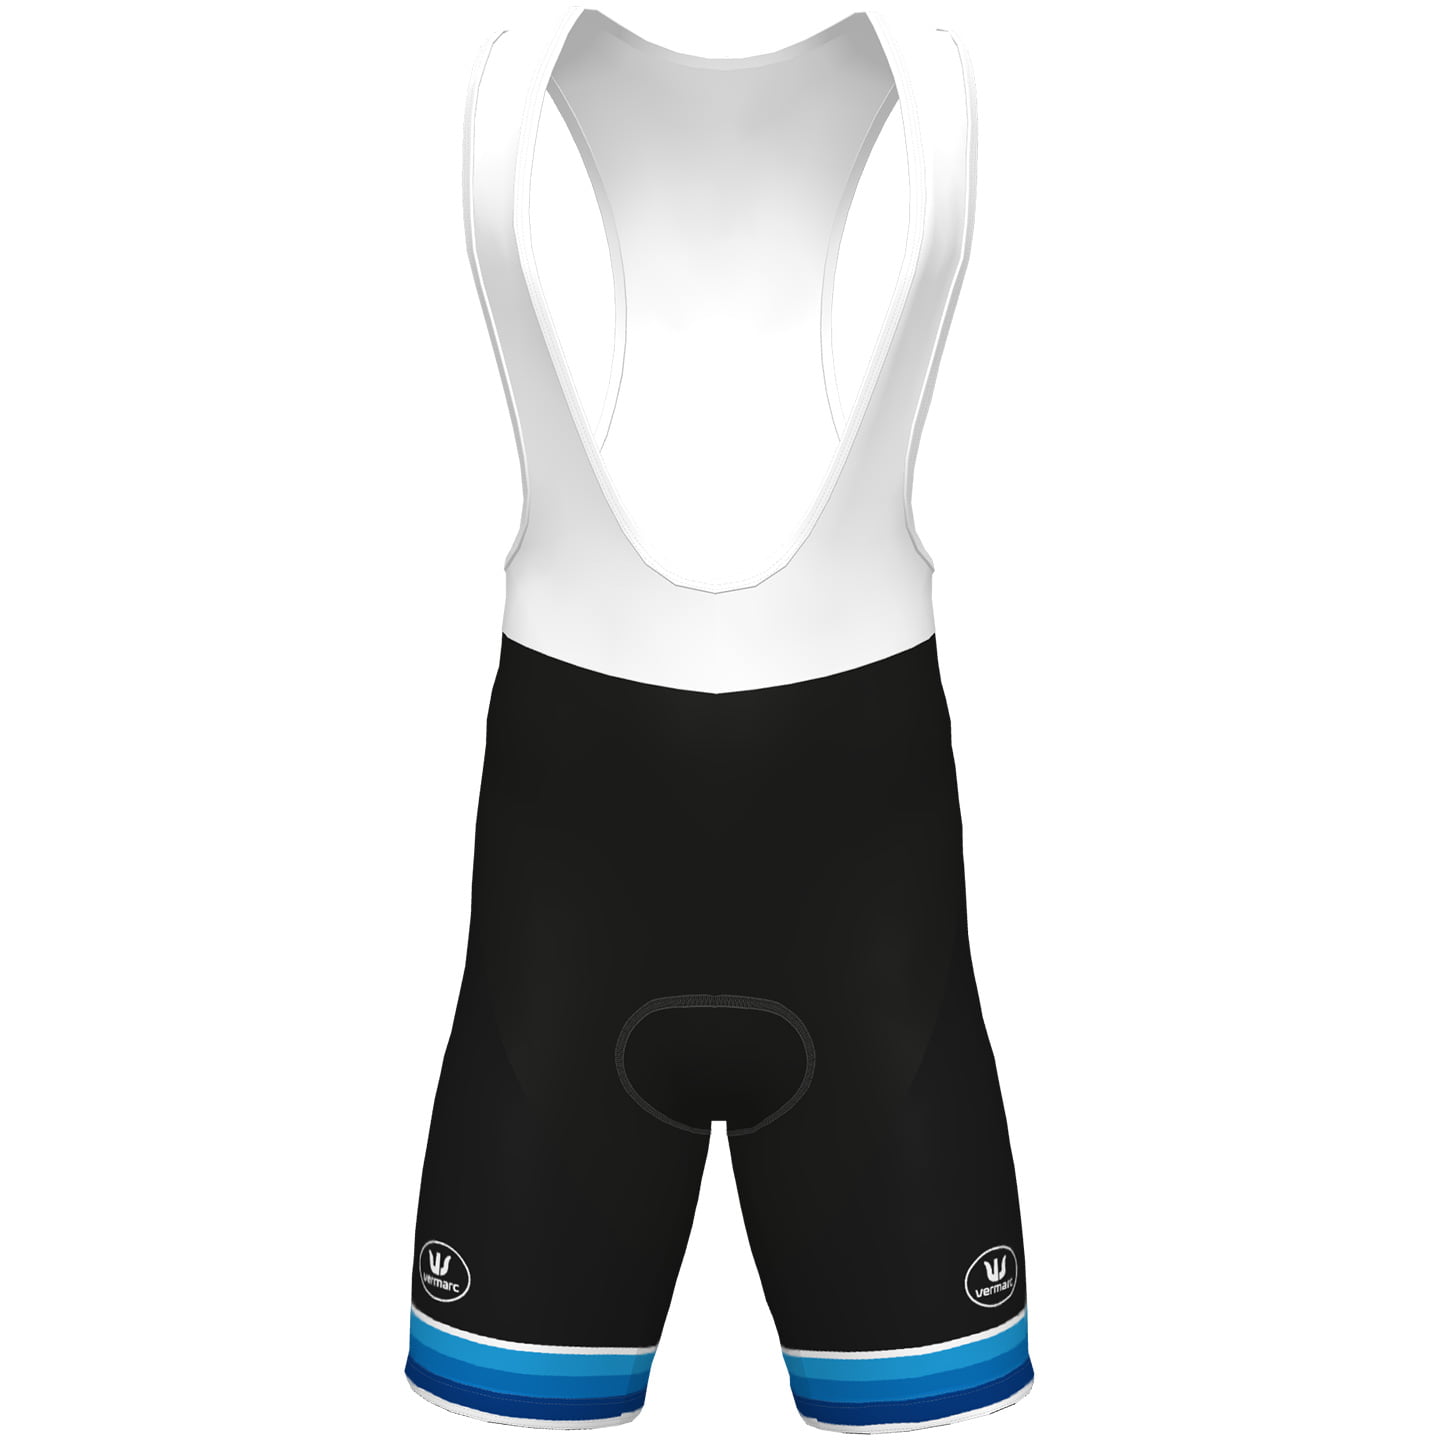 TREK BALOISE LION Bib Shorts European Champion 2022, for men, size M, Cycle shorts, Cycling clothing